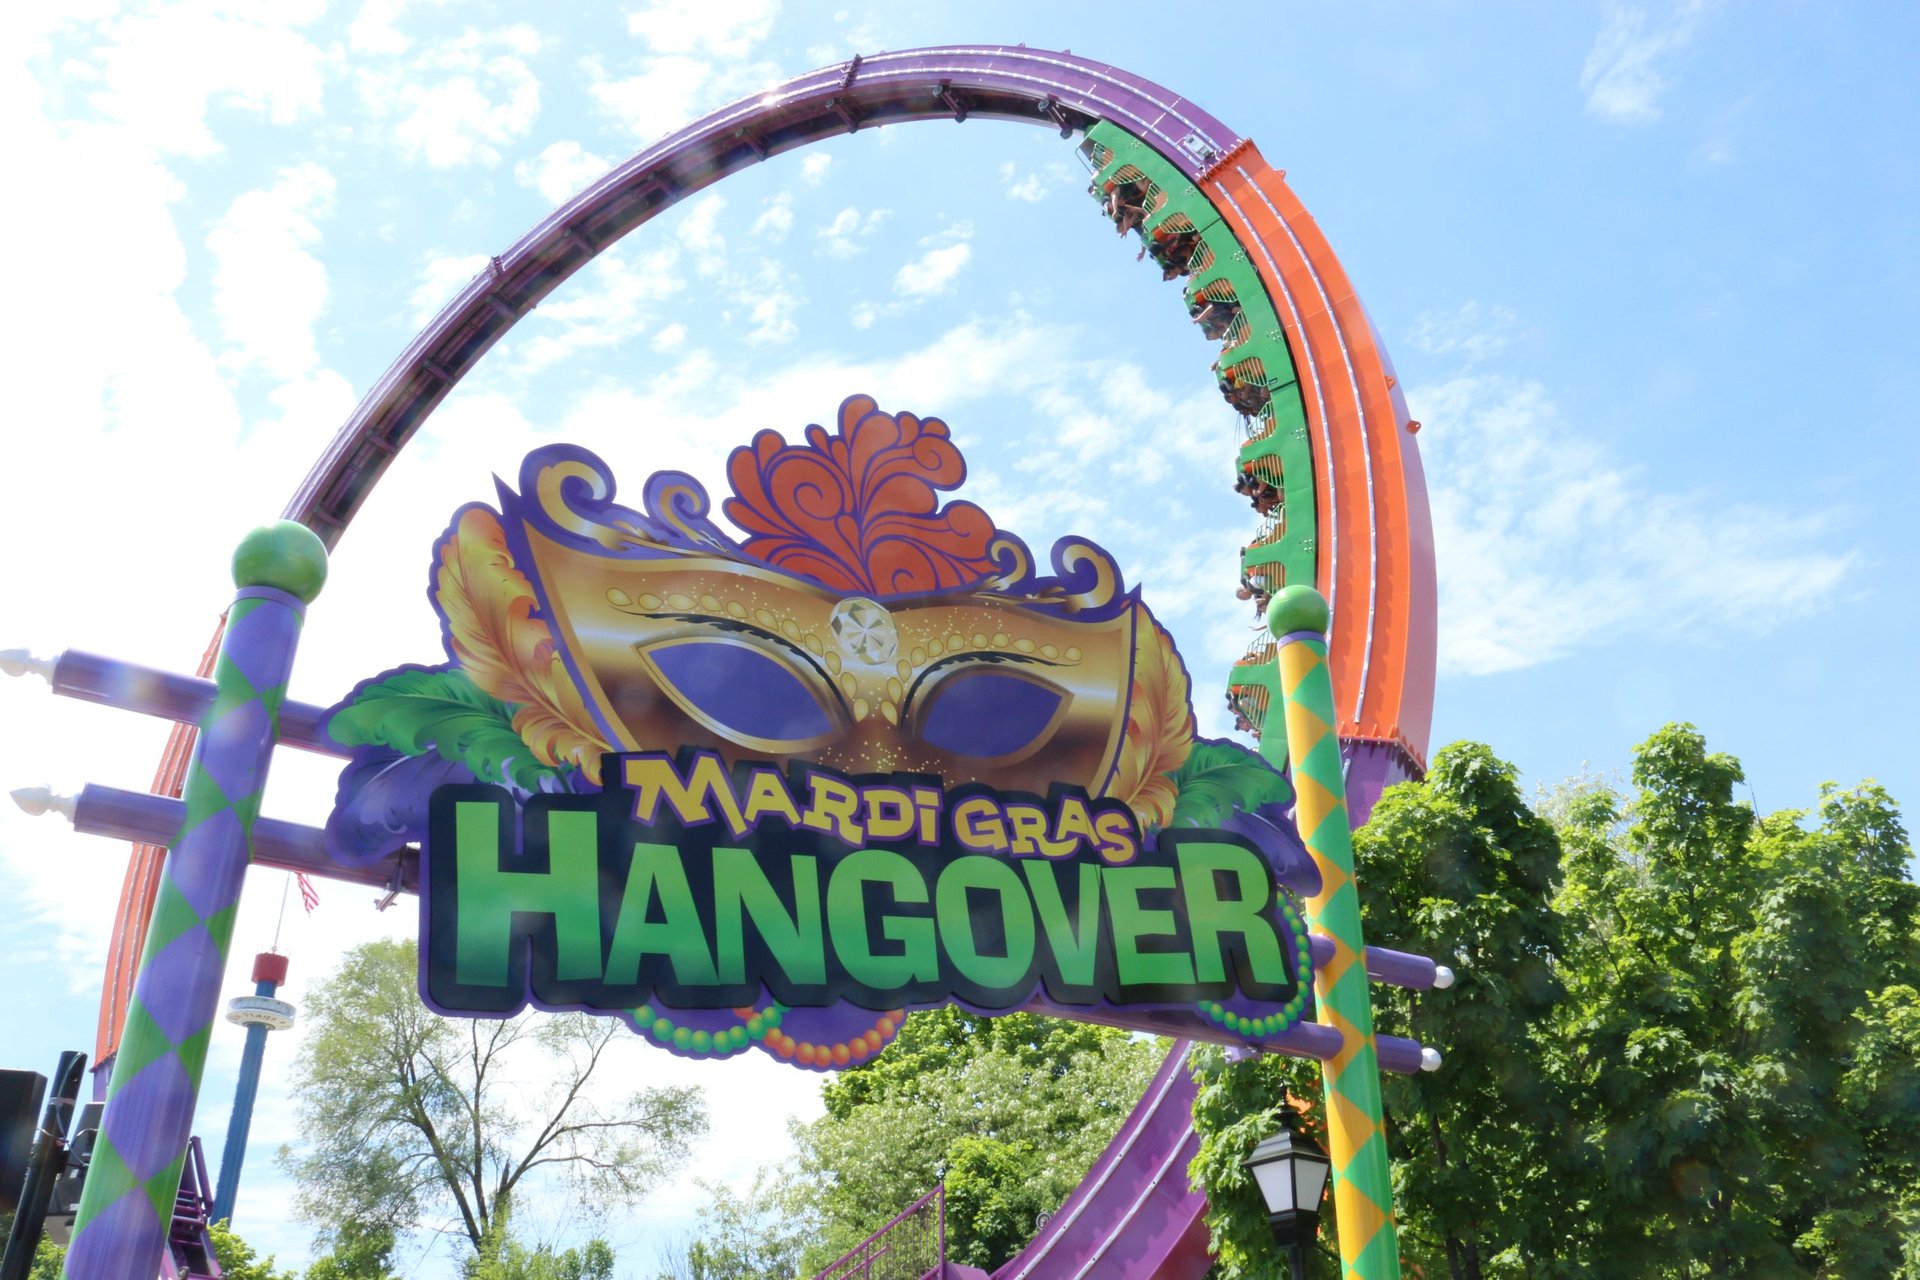 Mardi Gras Hangover, Six Flags Great America